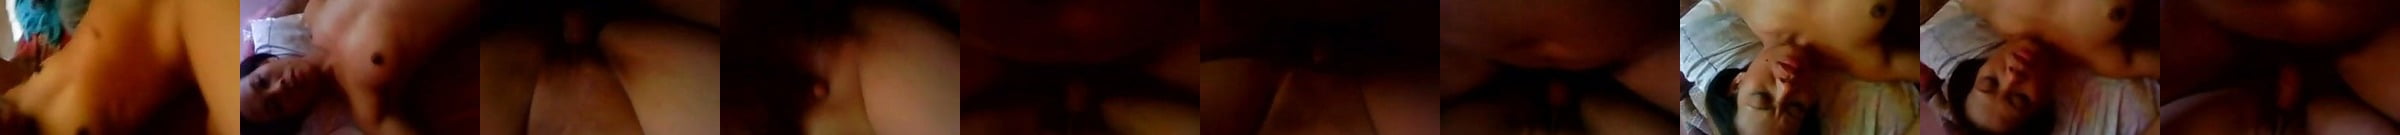 Ngentot Pacar Semok Gaya Wot Free Blackboyaddictionz Porn Video XHamster